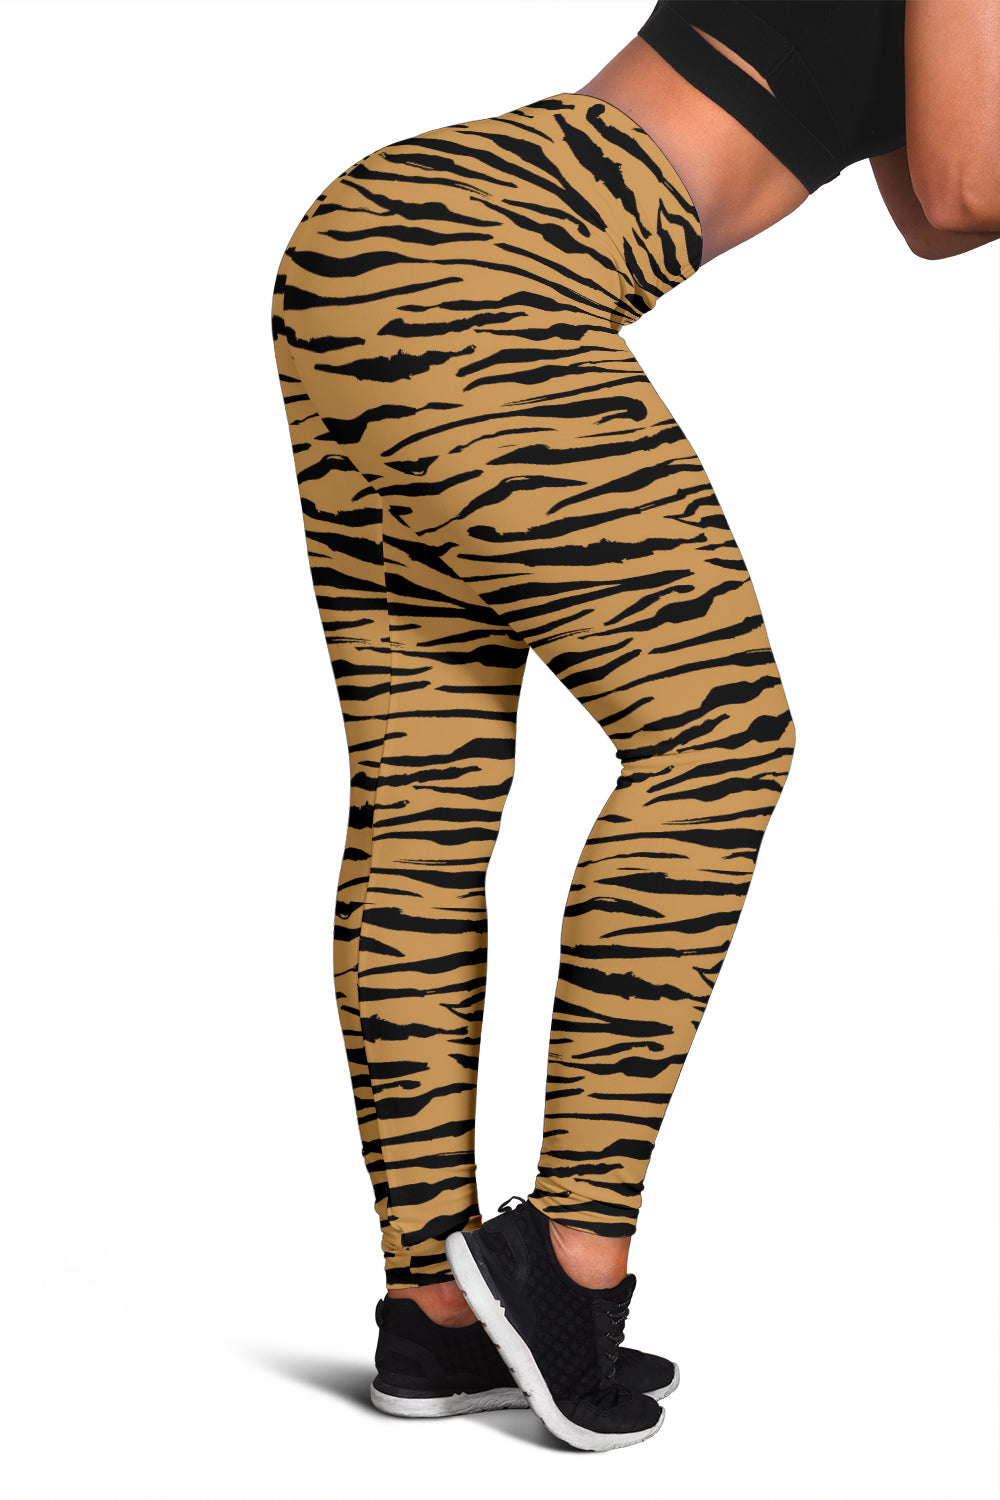 Creamy Soft Tiger Print Leggings - USA Fashion (Brown) One Size